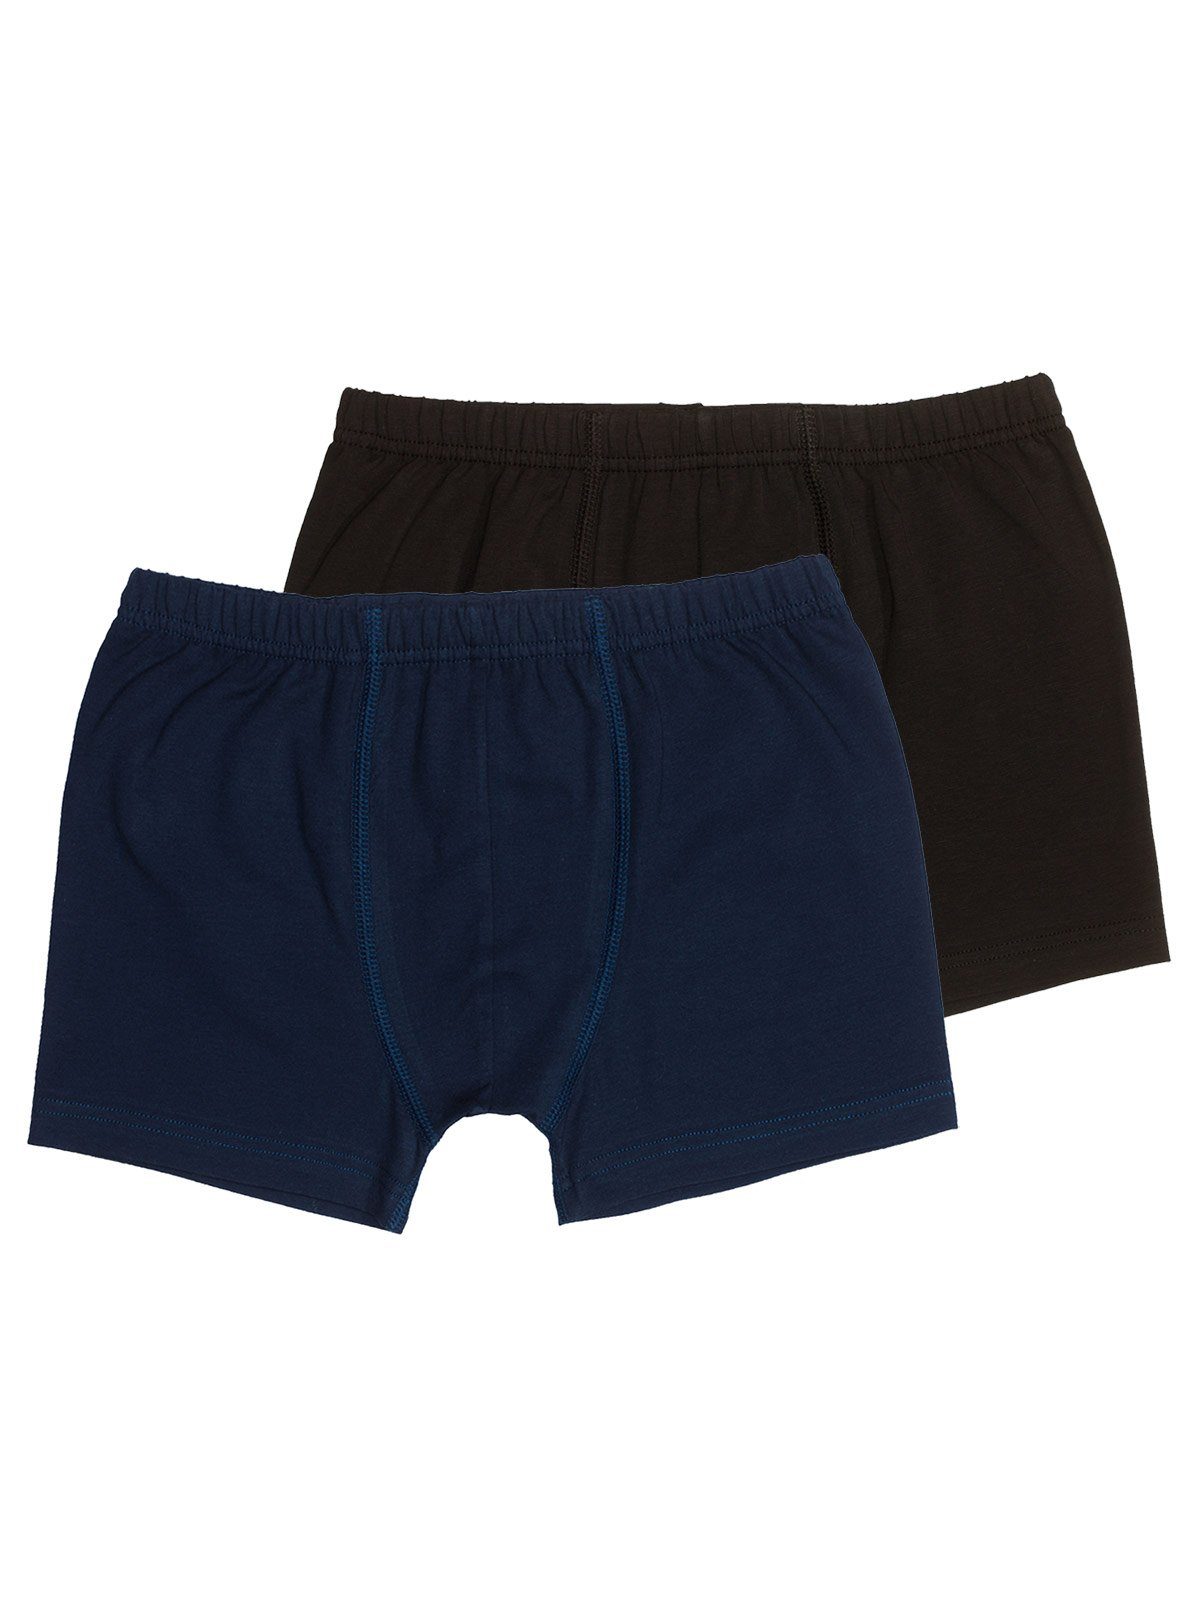 Sweety for Kids Boxershorts 2er Sparpack Knaben Retro Shorts Single Jersey (Spar-Set, 2-St) hohe Markenqualität navy schwarz